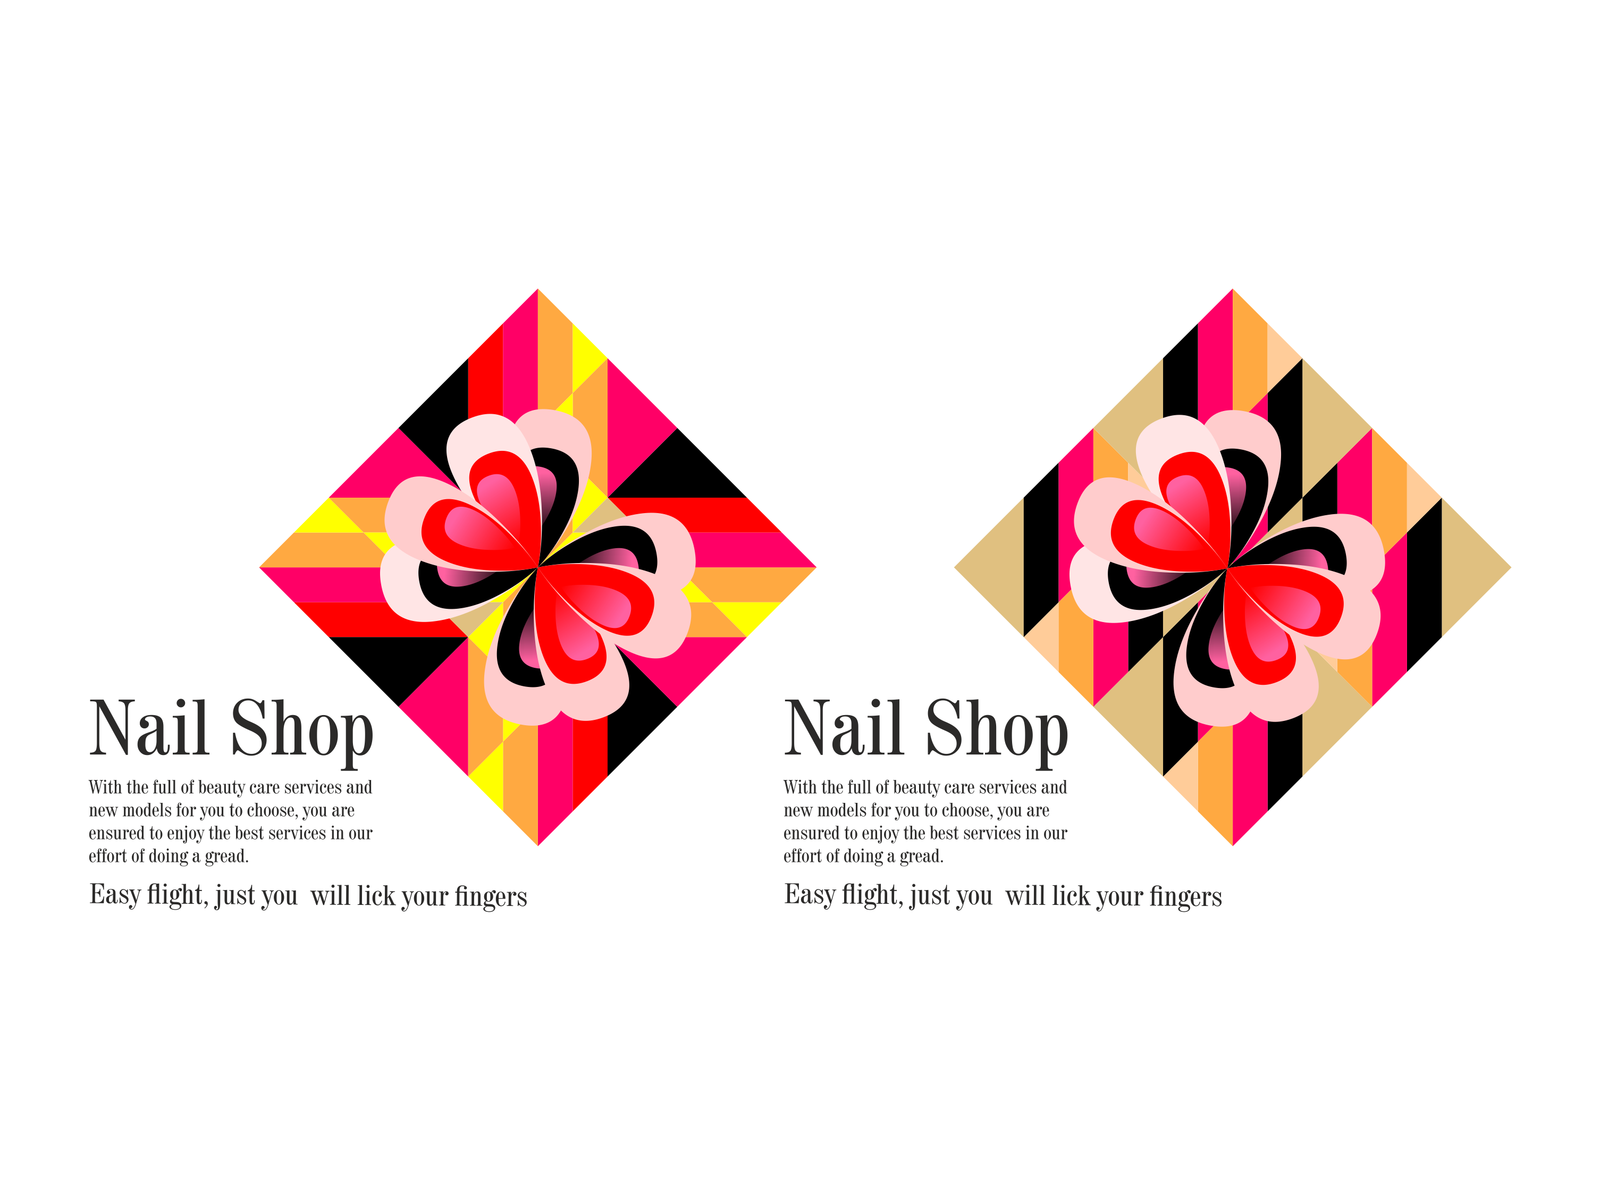 9. The Nail Shop Australia - wide 5